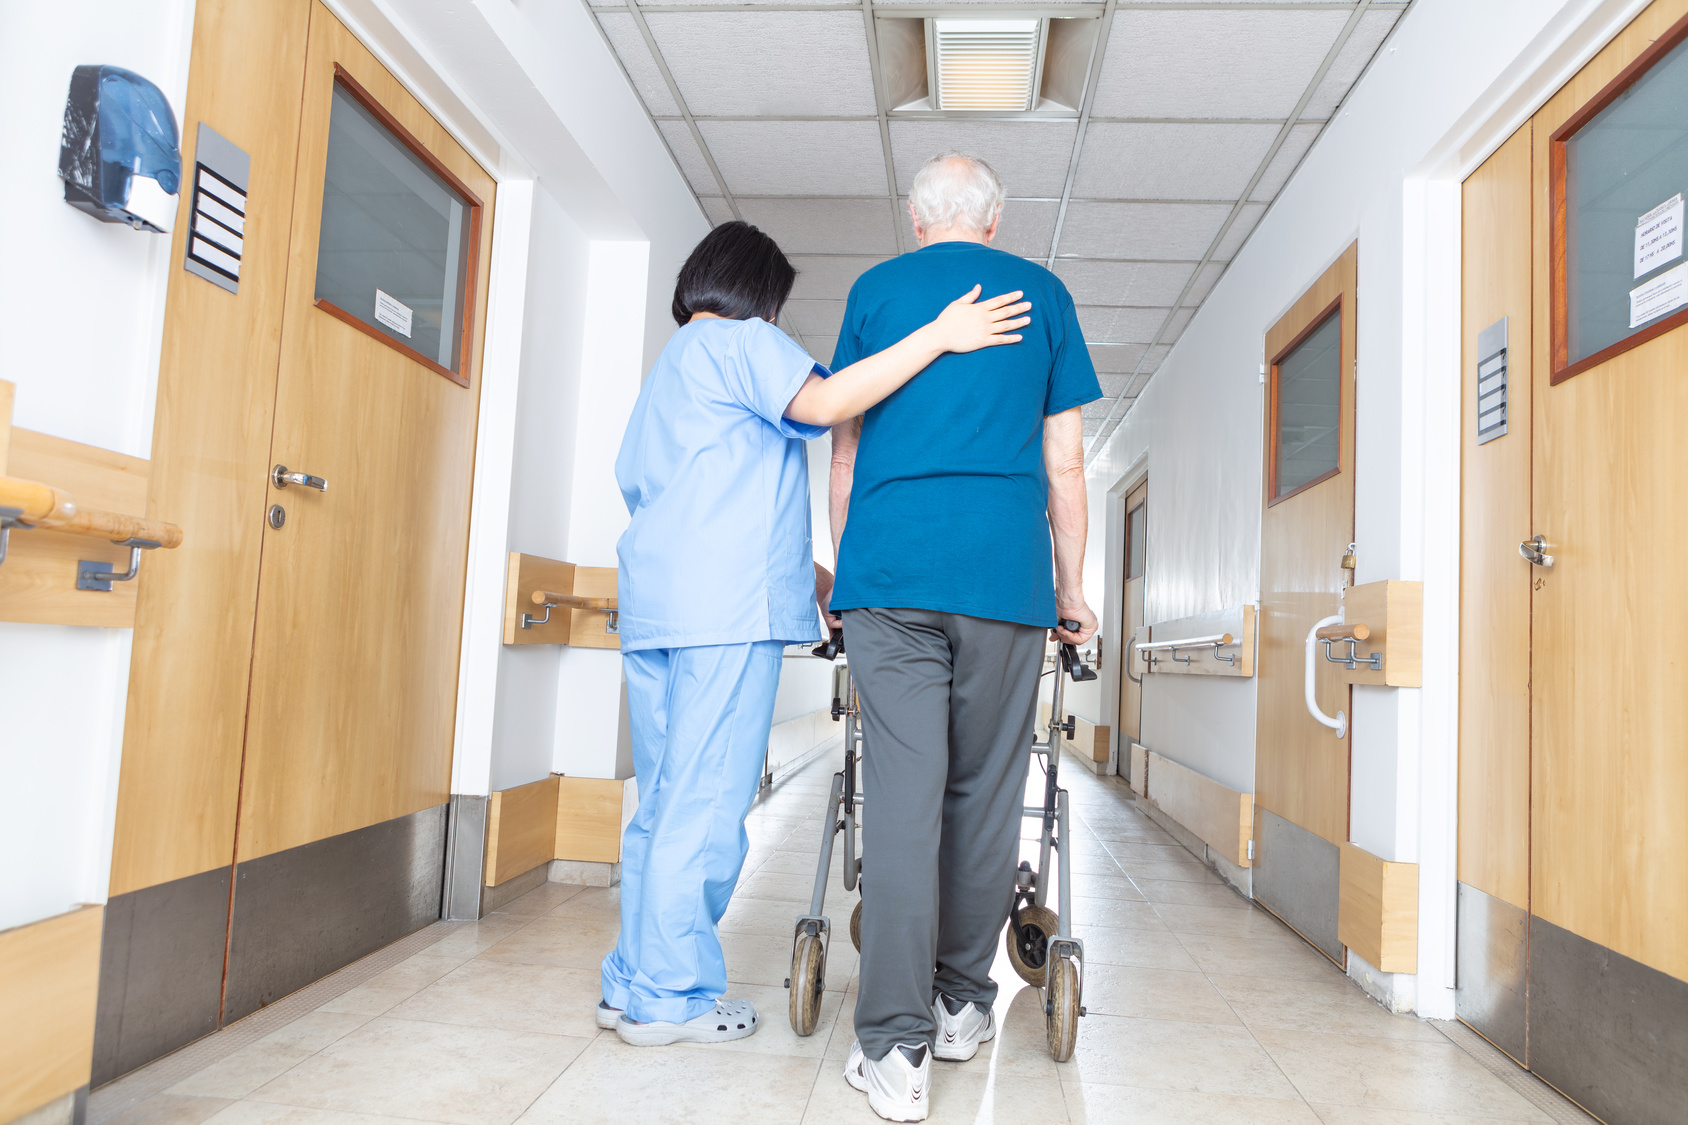 Nurse-to-Patient Ratio Debate Heats Up – Again